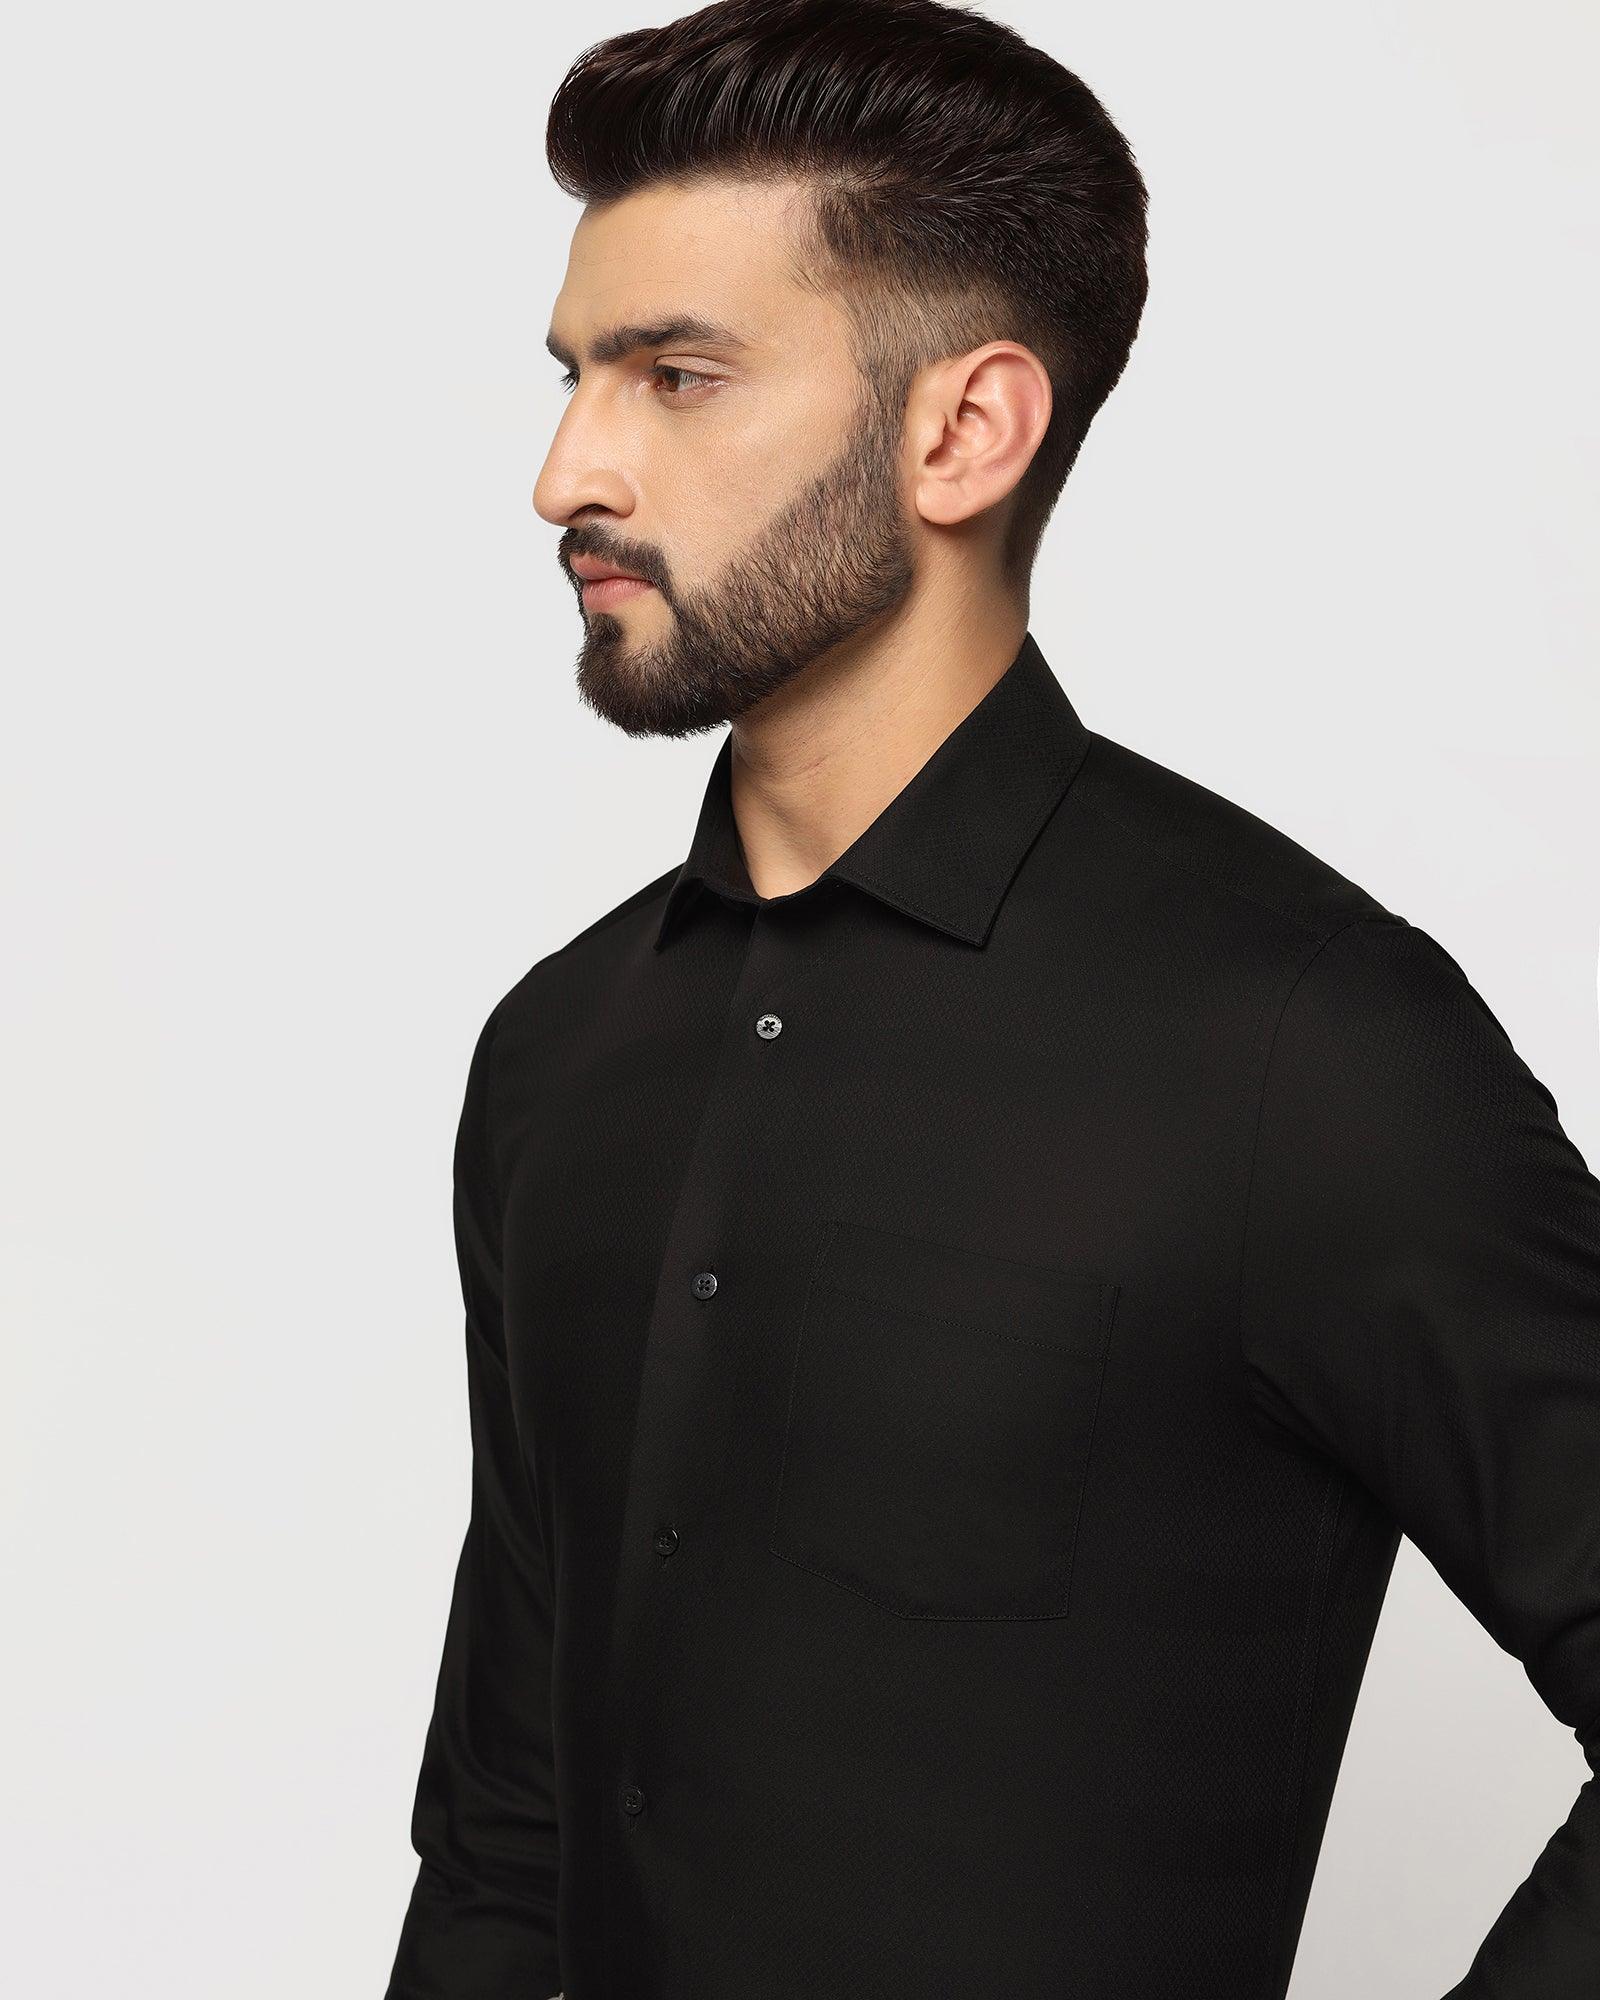 Formal Black Textured Shirt - Peta